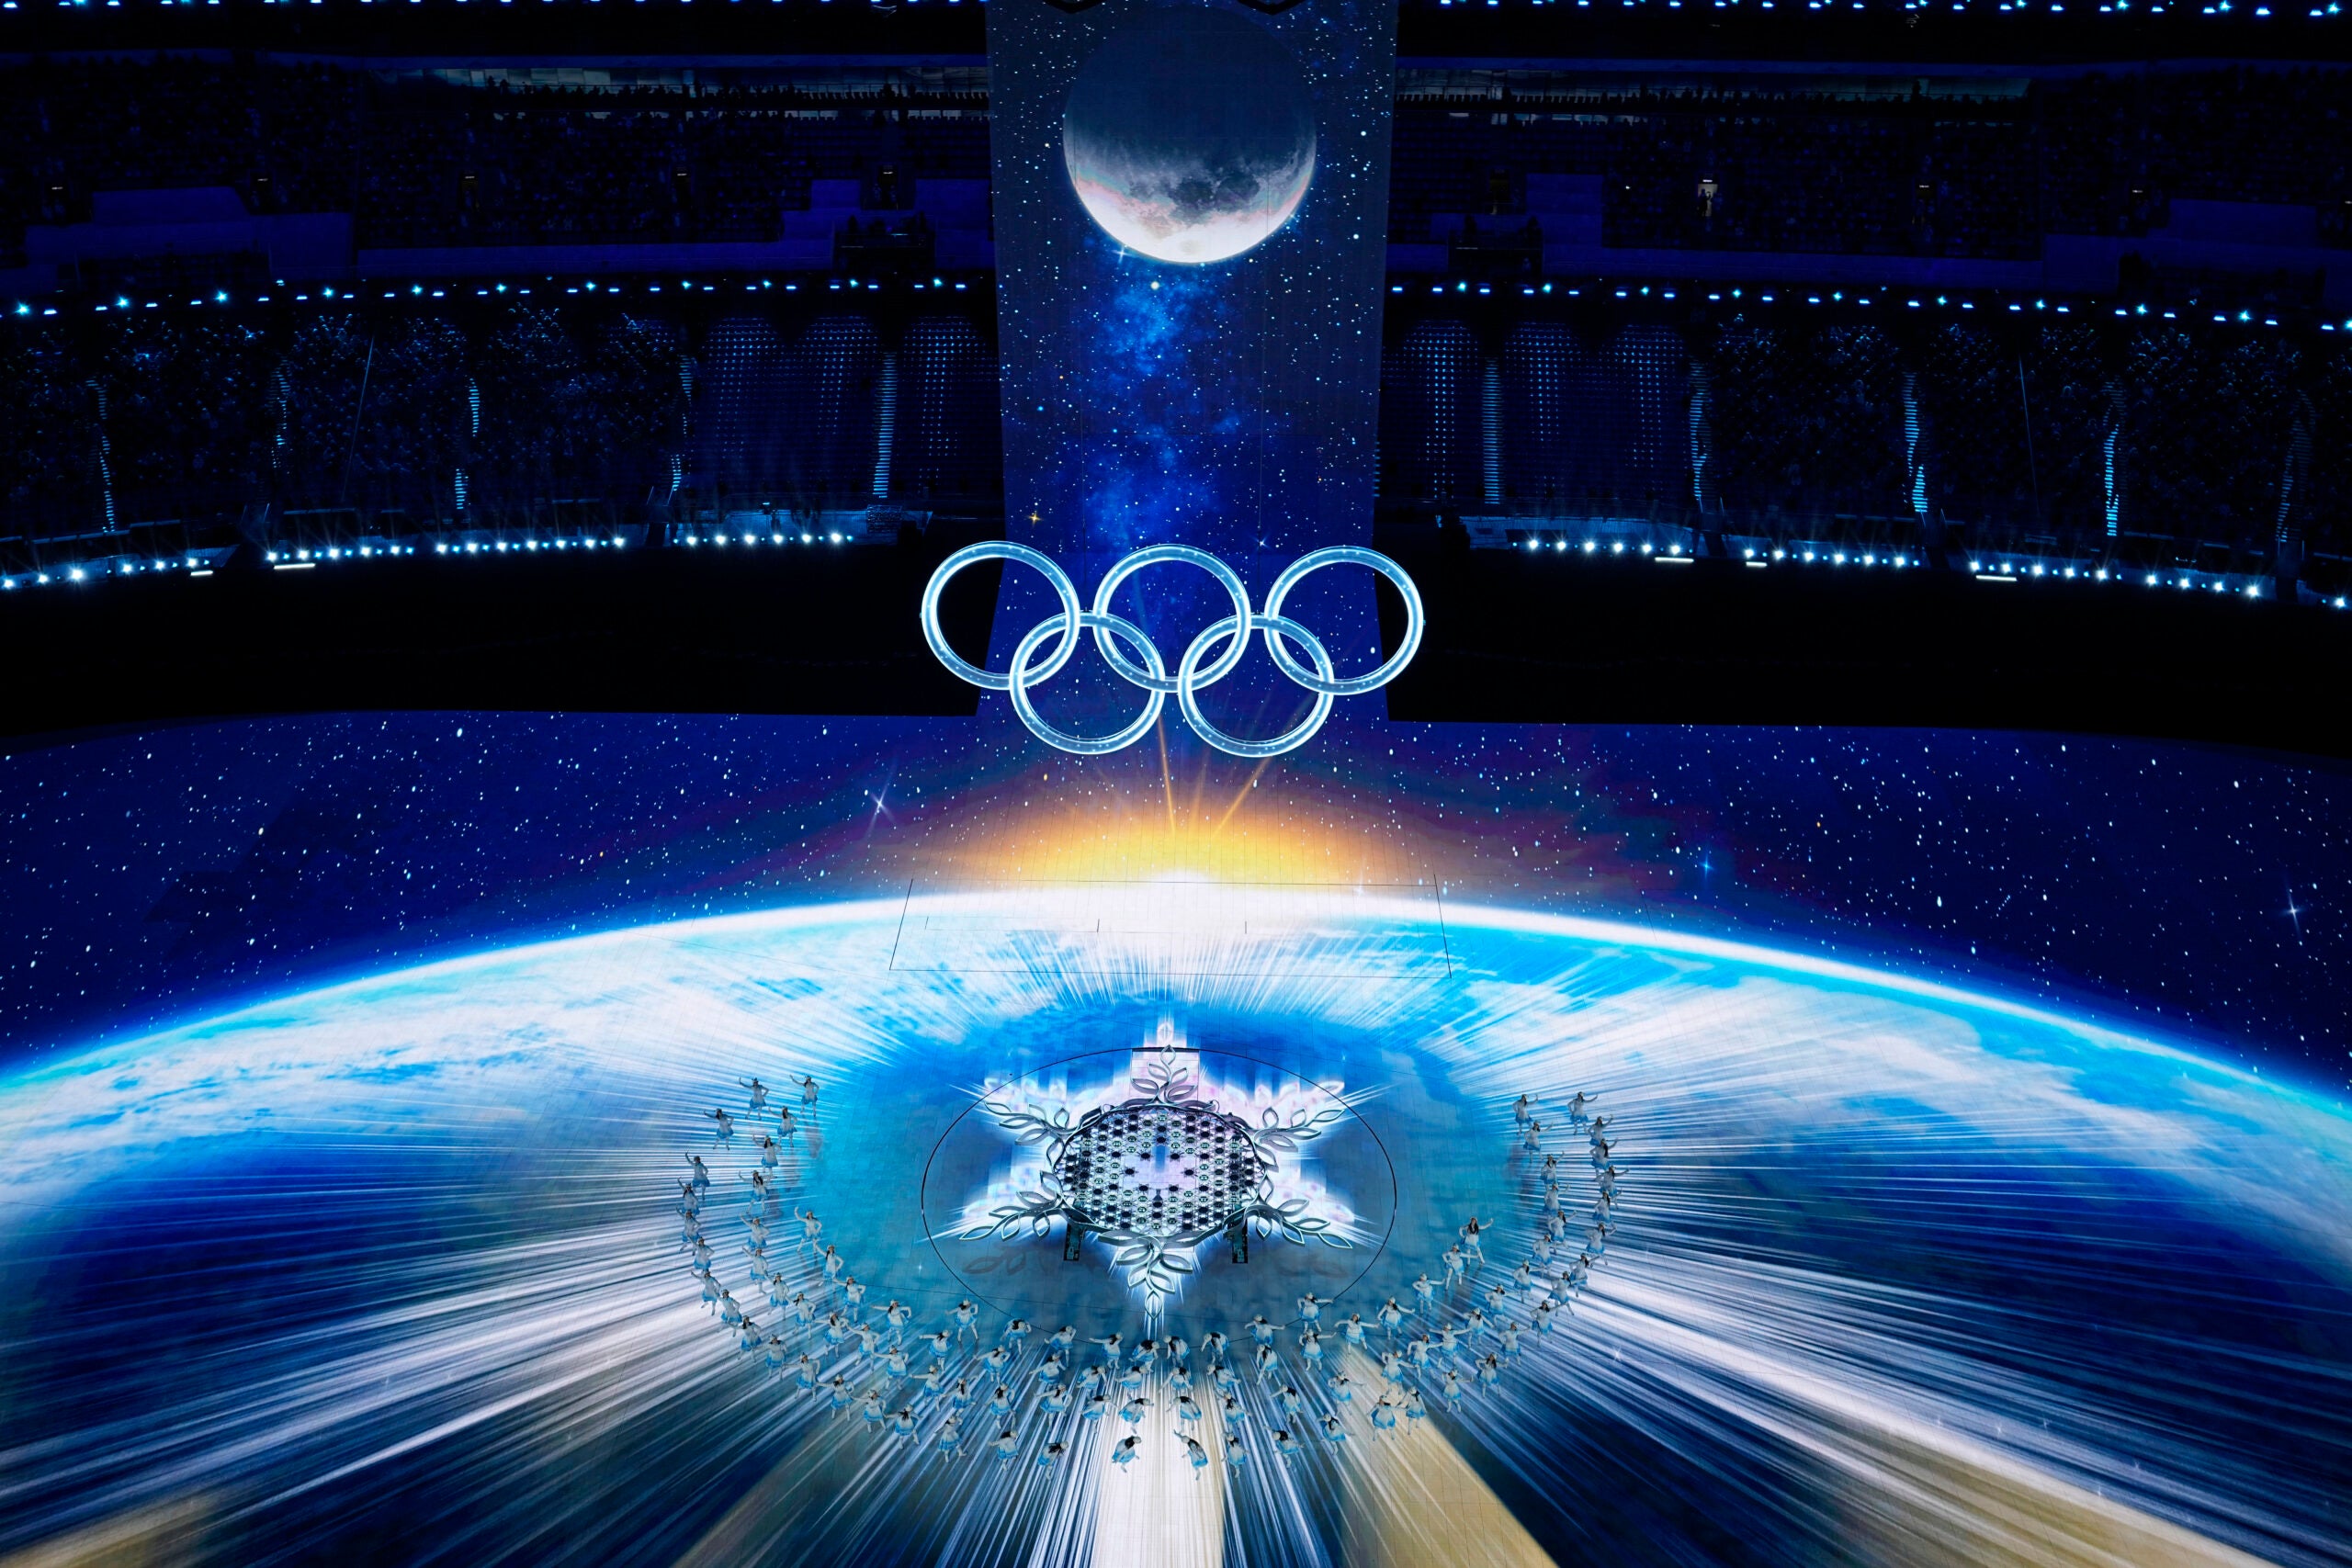 The Olympics opening ceremony in Beijing